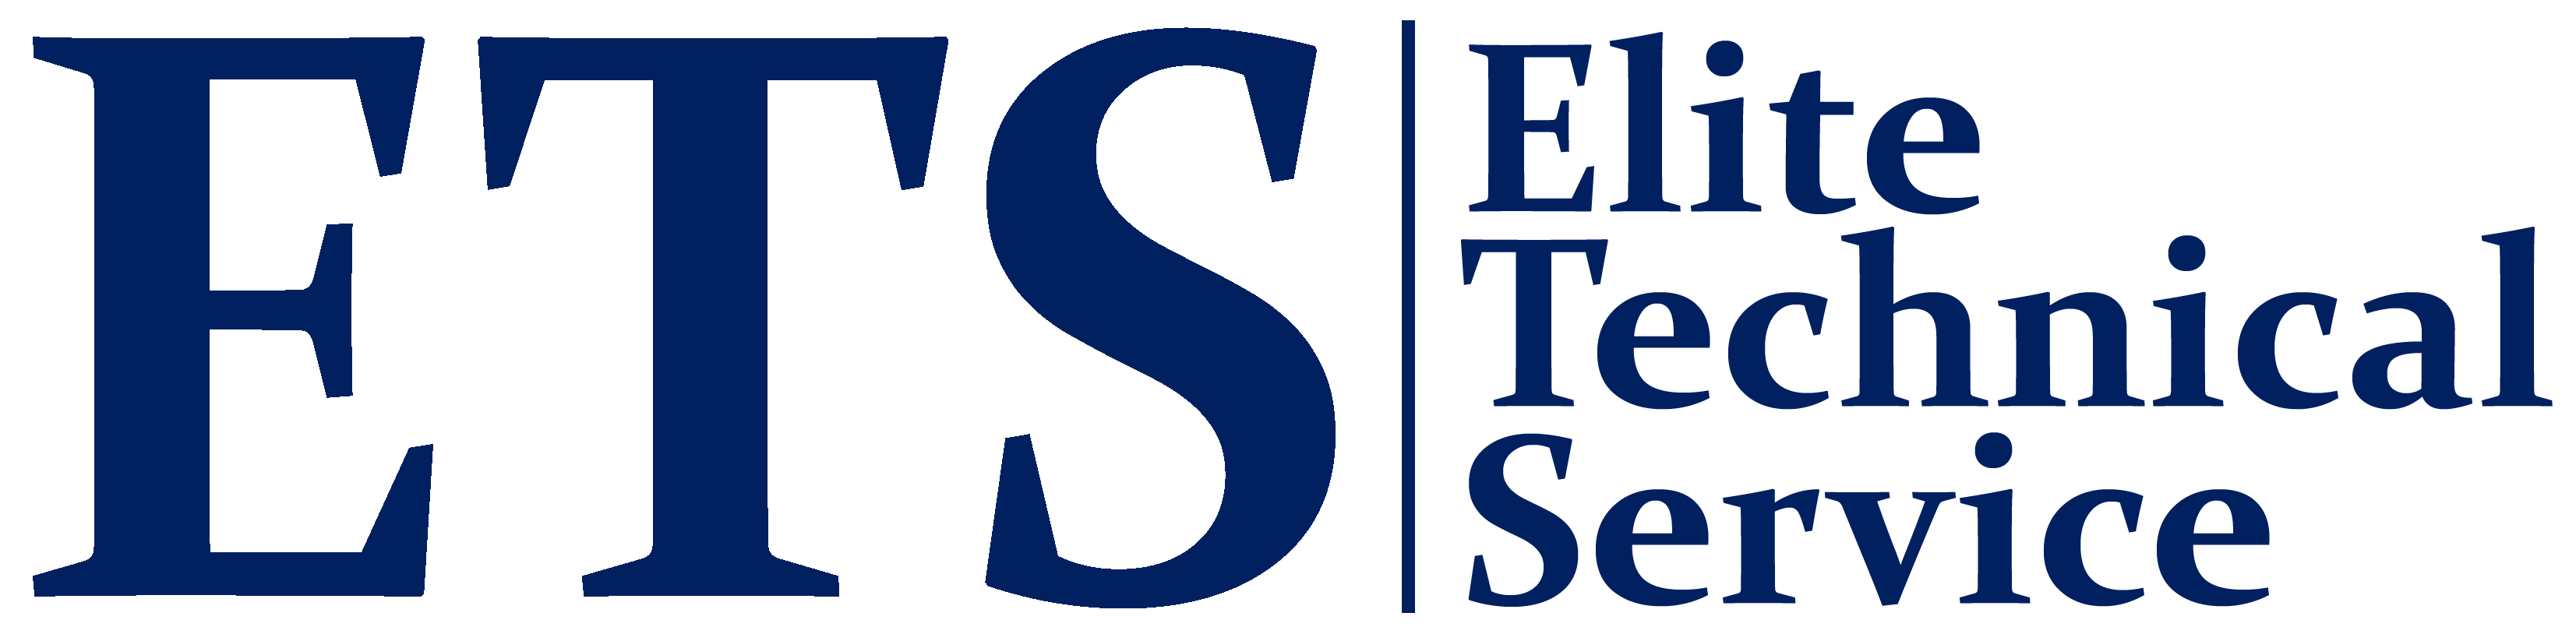 Elite Technical Service logo